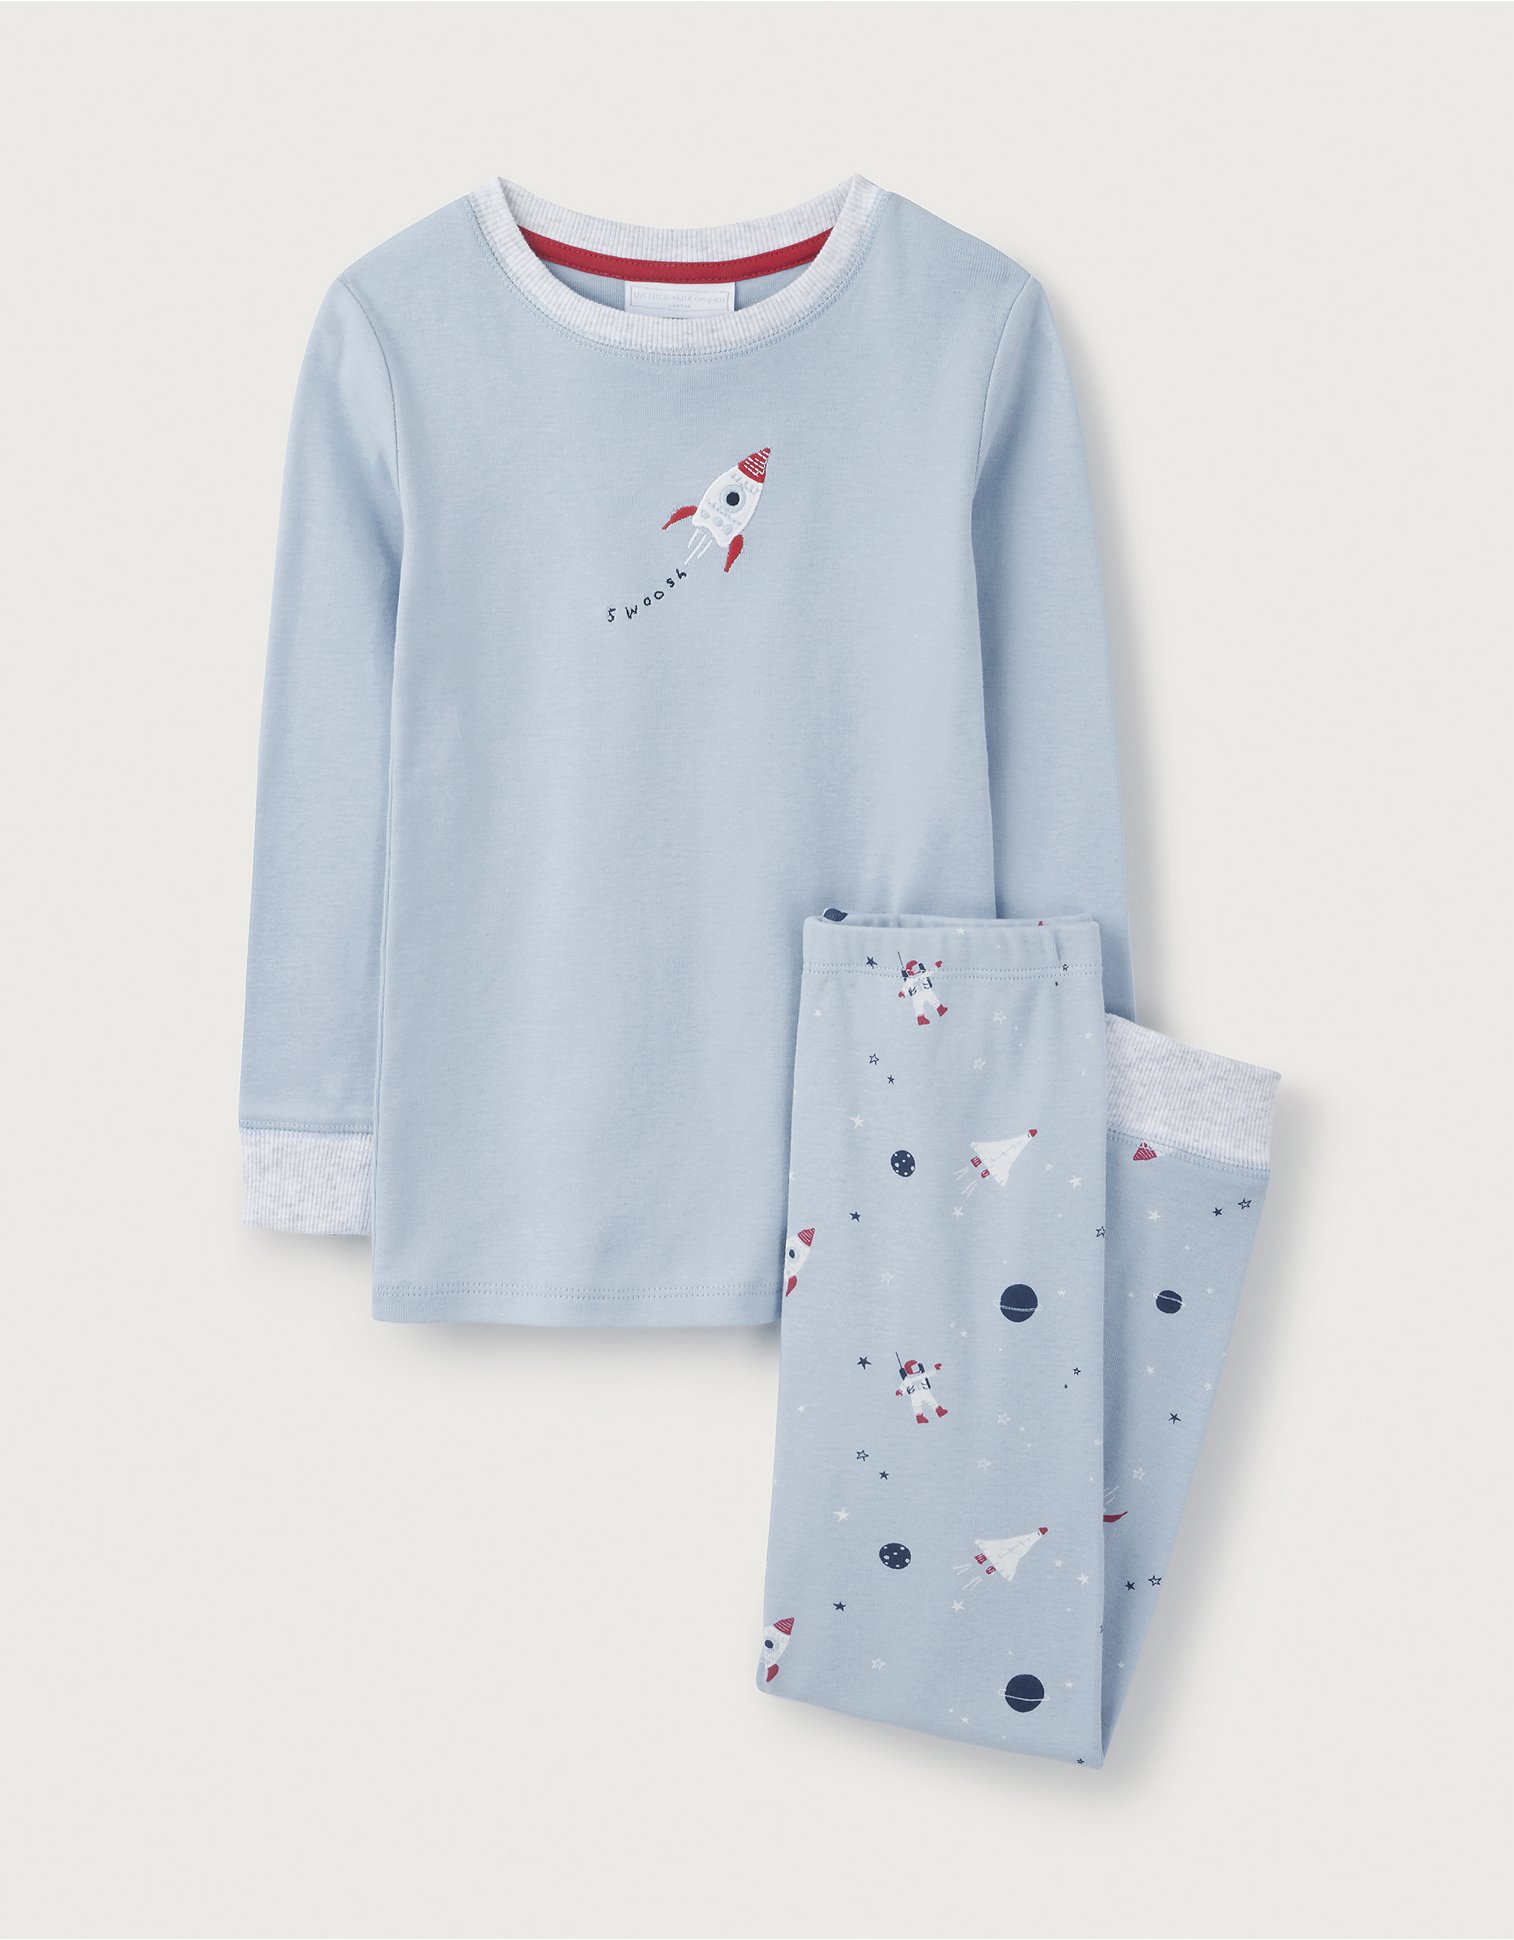 Embroidered Rocket Slim-Fit Pyjamas The White Company Clothing Loungewear Pajamas 1-12yrs 3-4Y 